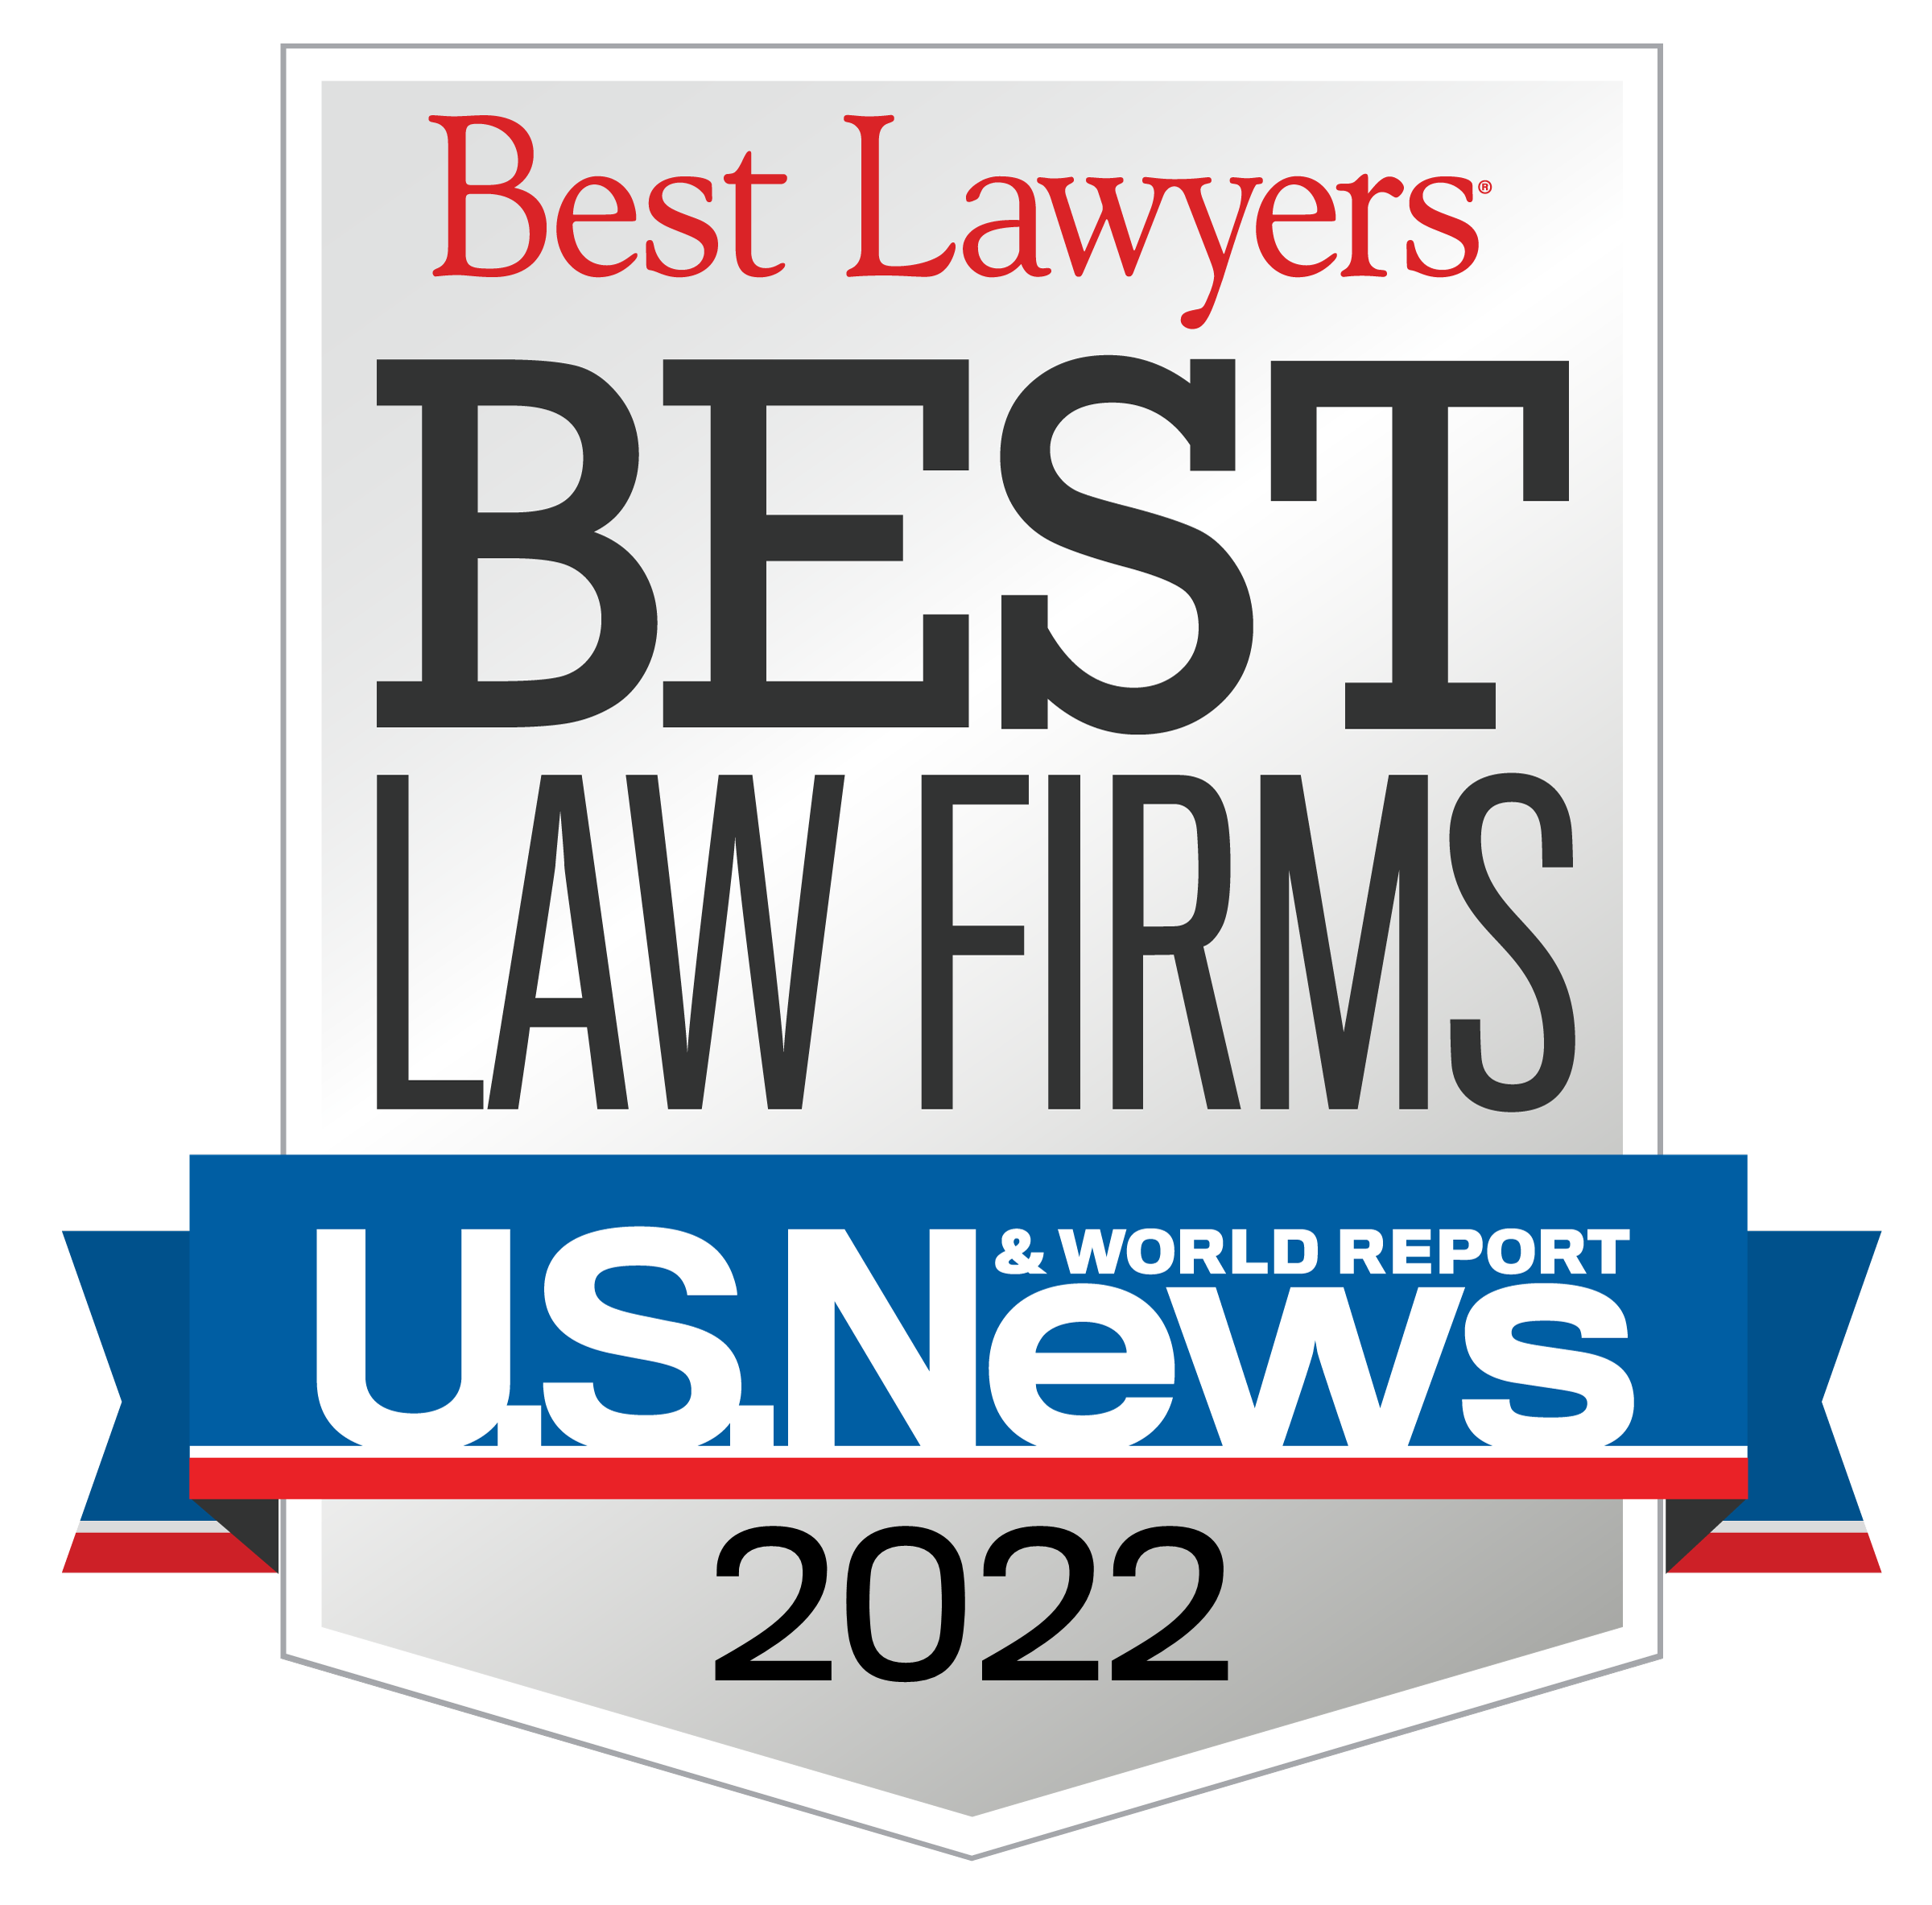 U.S. News & World Report Best Law Firms